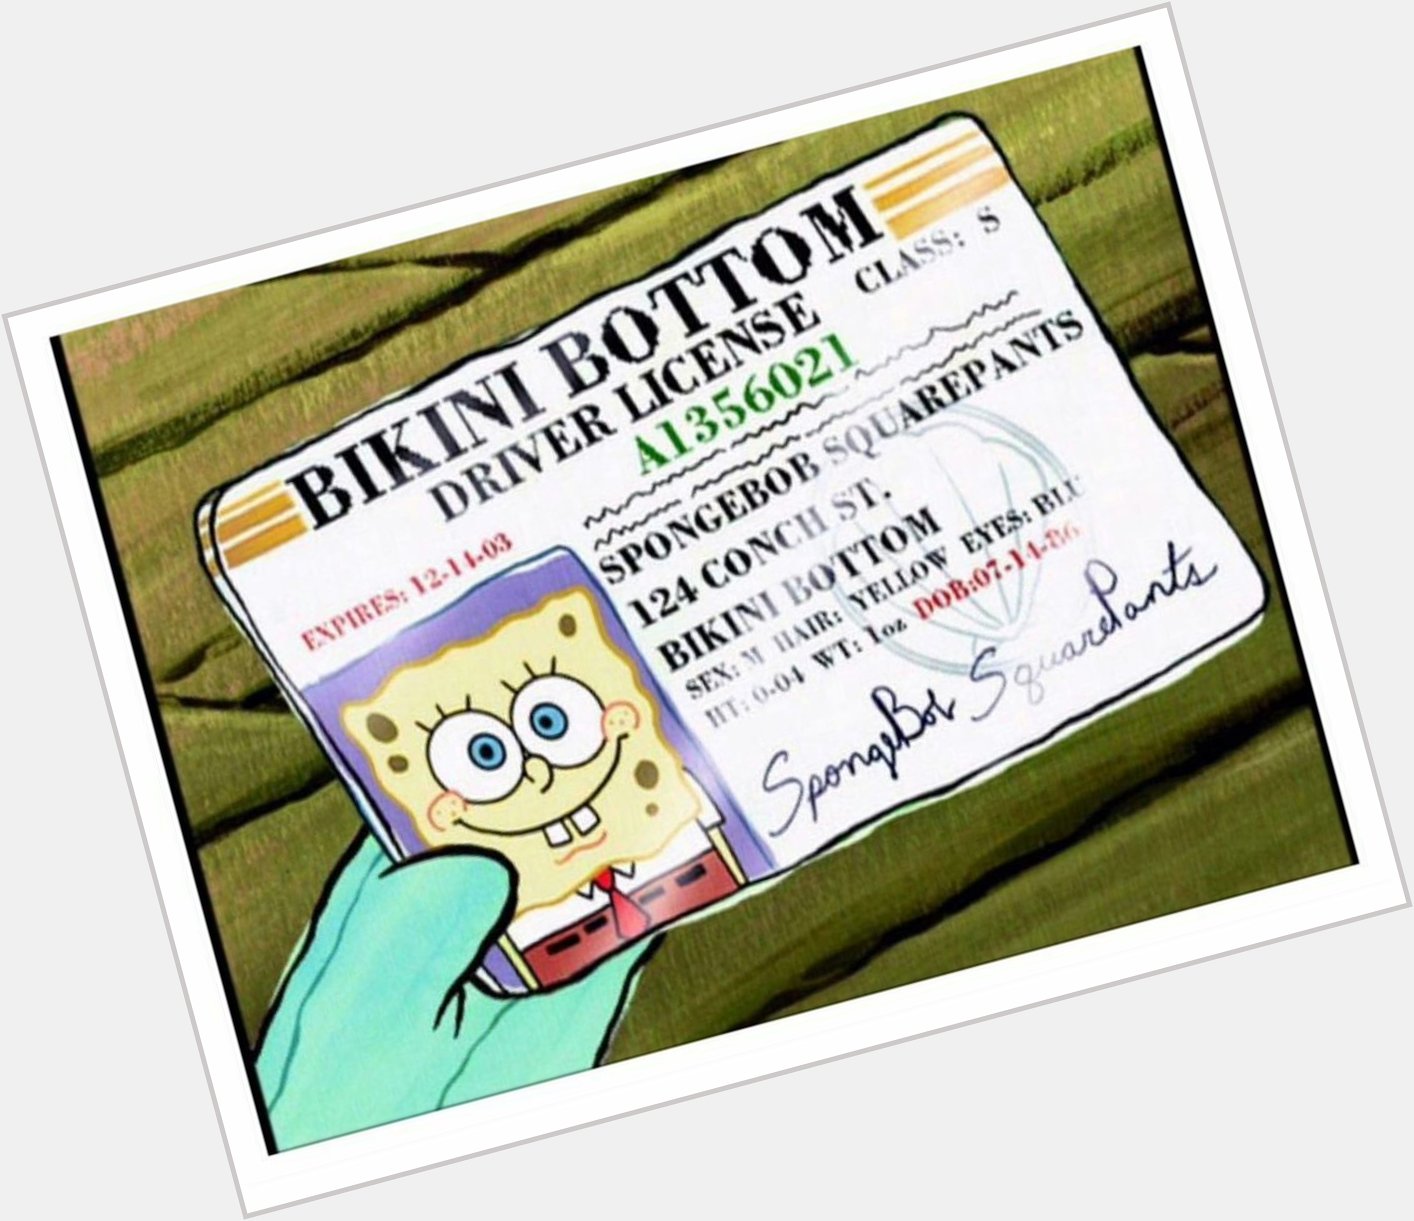 I just want to wish Spongebob Squarepants a very happy birthday  